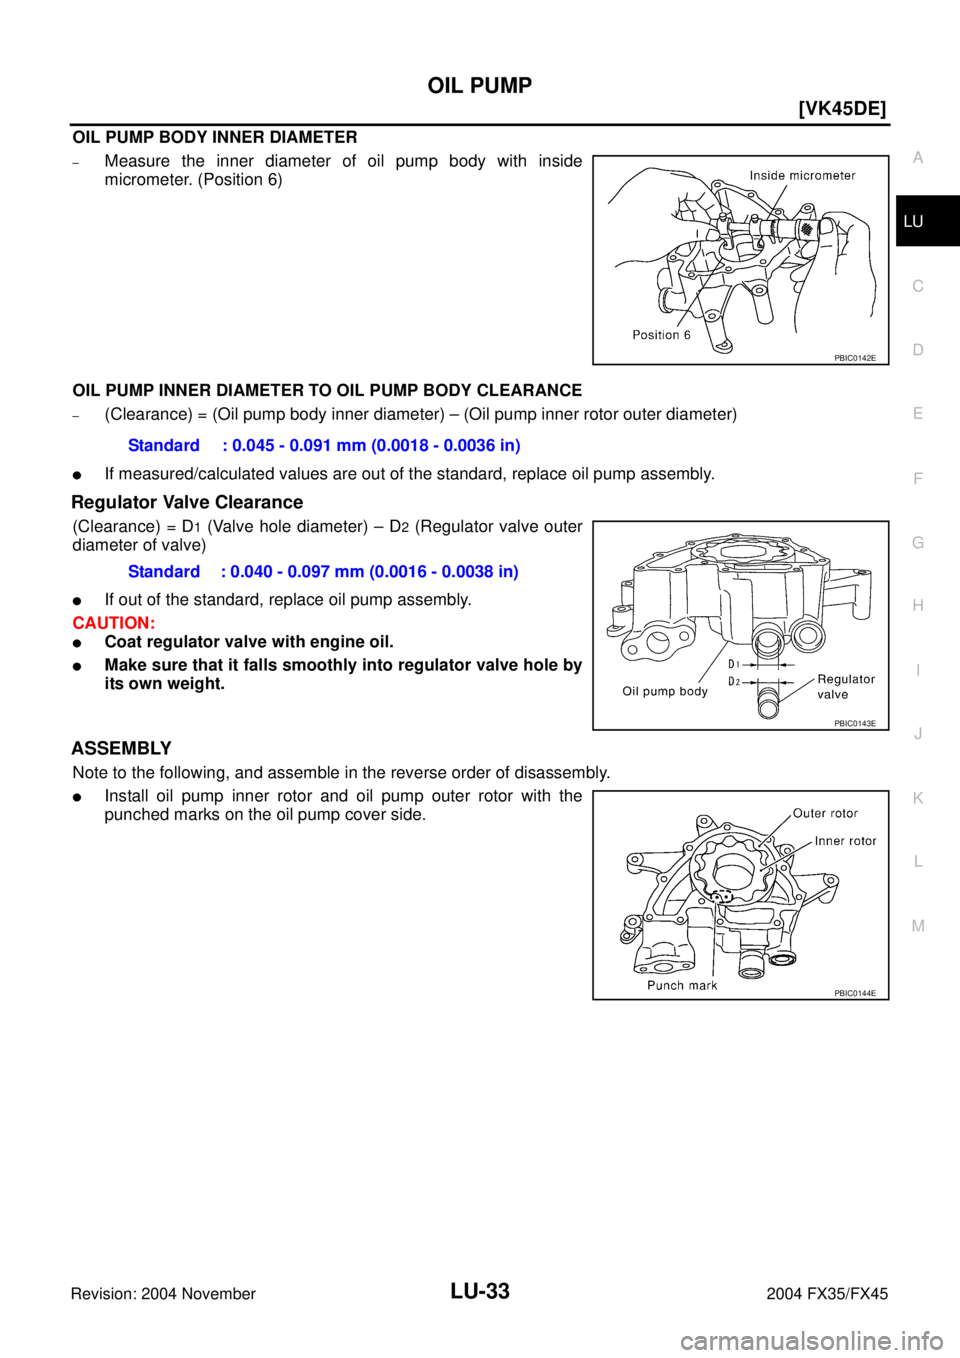 INFINITI FX35 2004  Service Manual OIL PUMP
LU-33
[VK45DE]
C
D
E
F
G
H
I
J
K
L
MA
LU
Revision: 2004 November 2004 FX35/FX45
OIL PUMP BODY INNER DIAMETER
–Measure the inner diameter of oil pump body with inside
micrometer. (Position 6